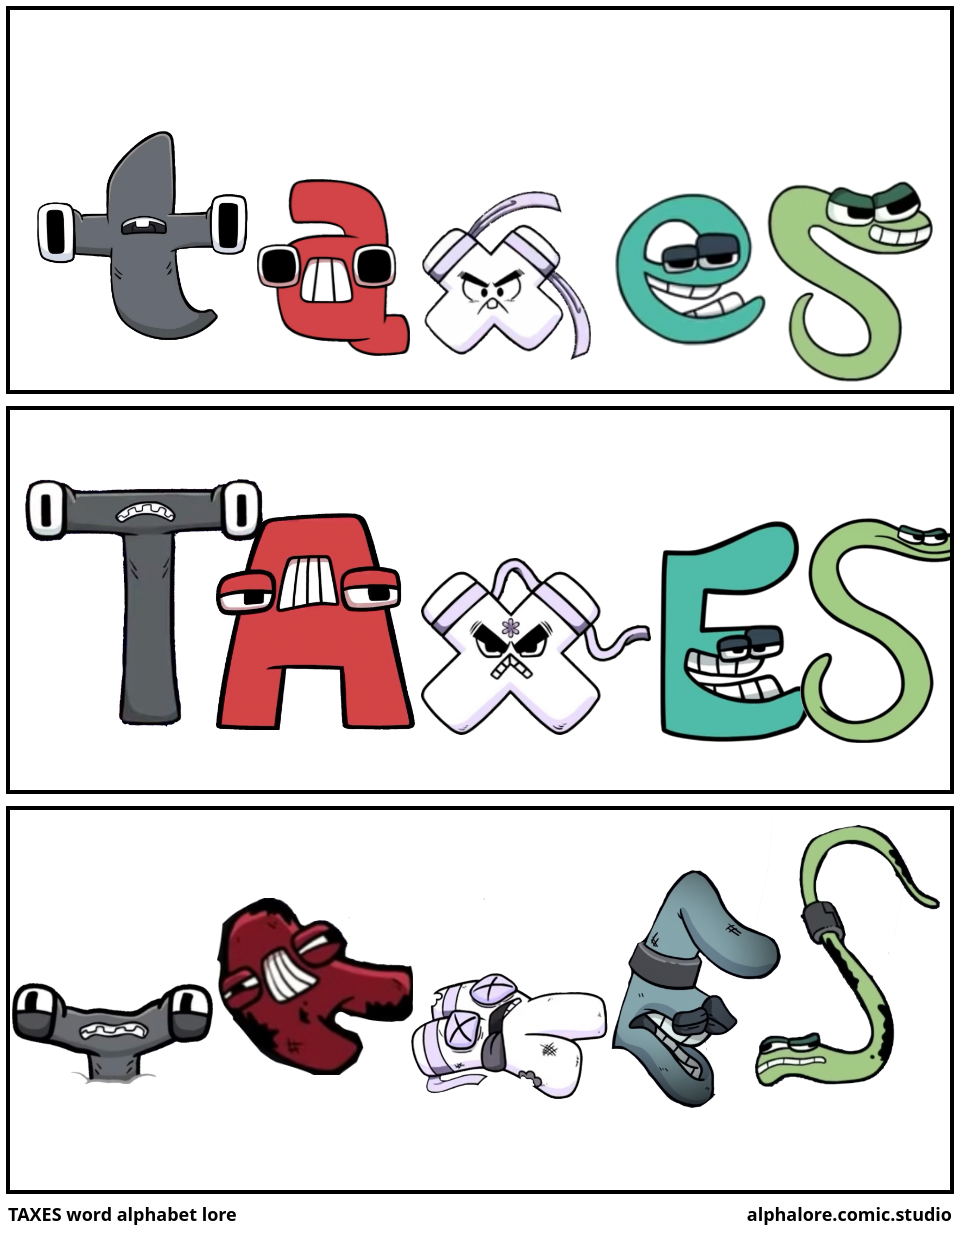 TAXES word alphabet lore